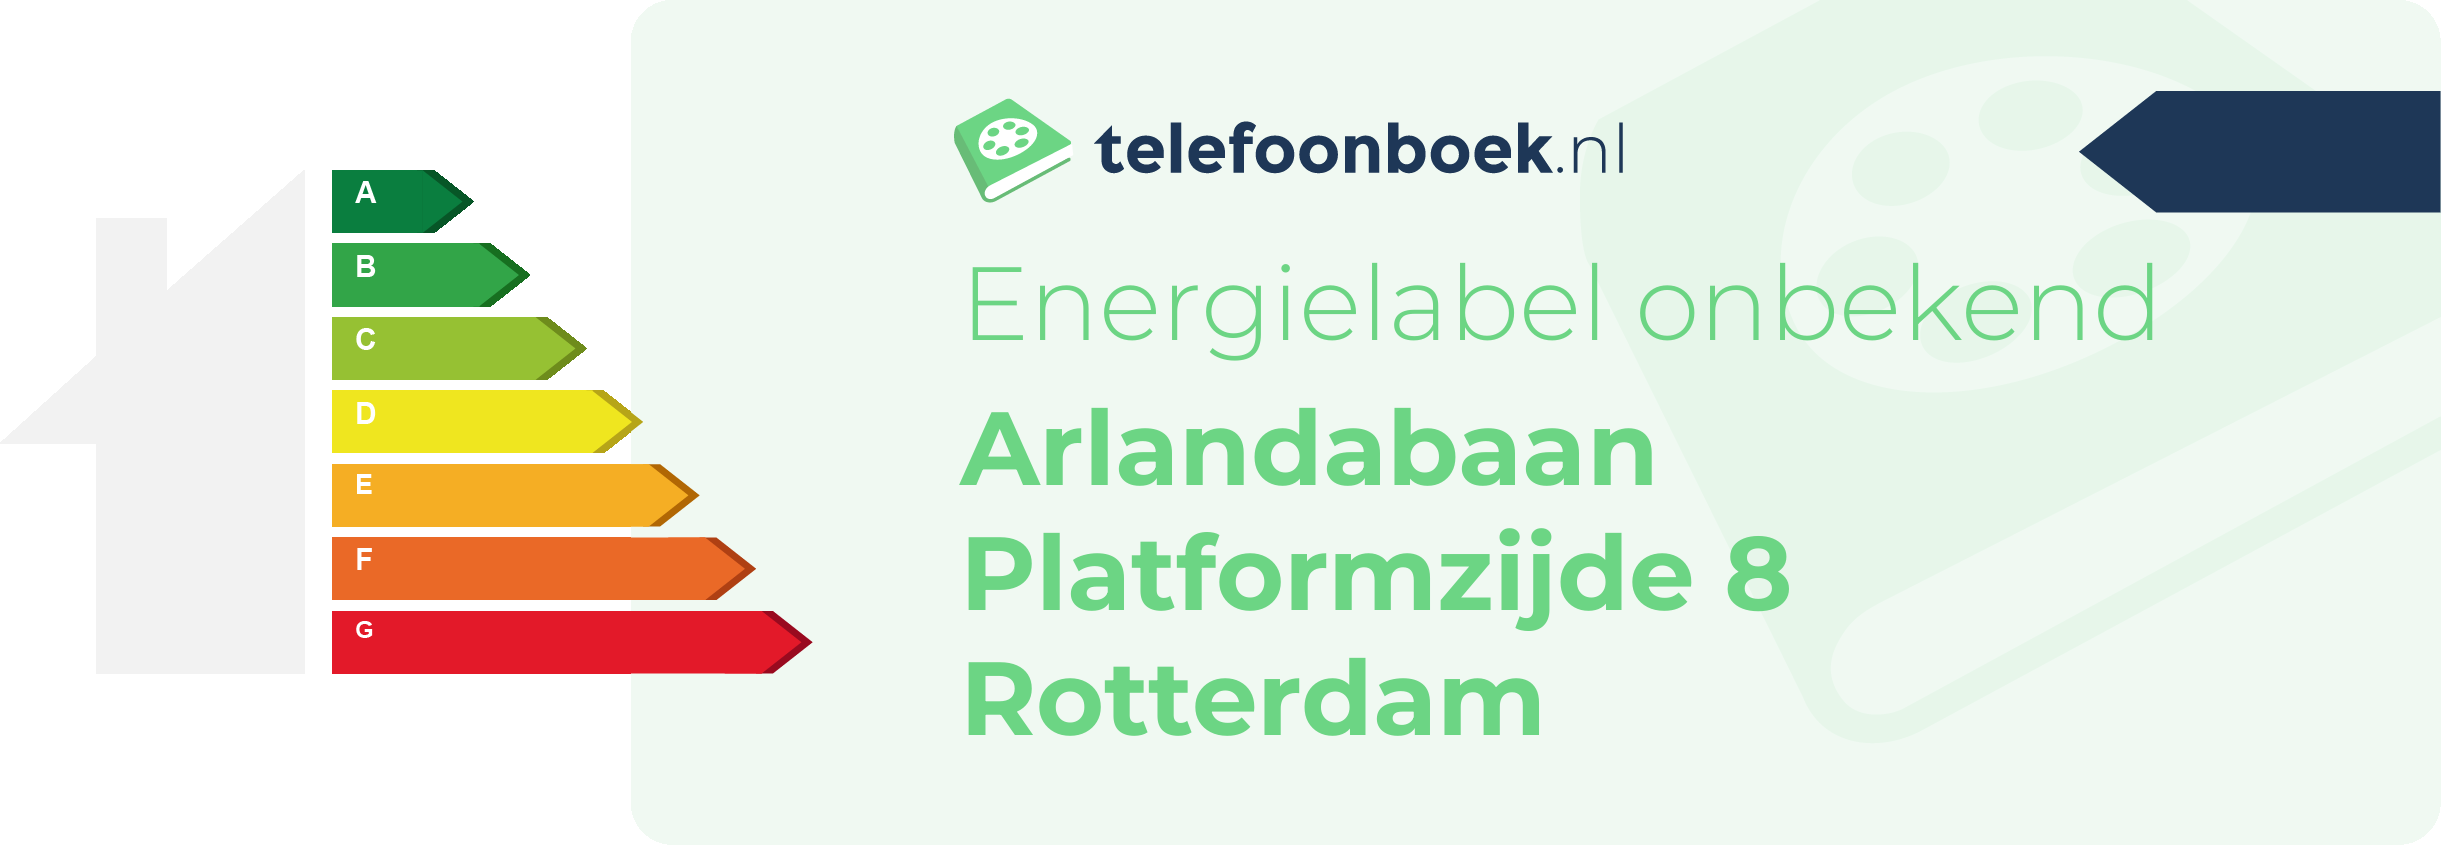 Energielabel Arlandabaan Platformzijde 8 Rotterdam